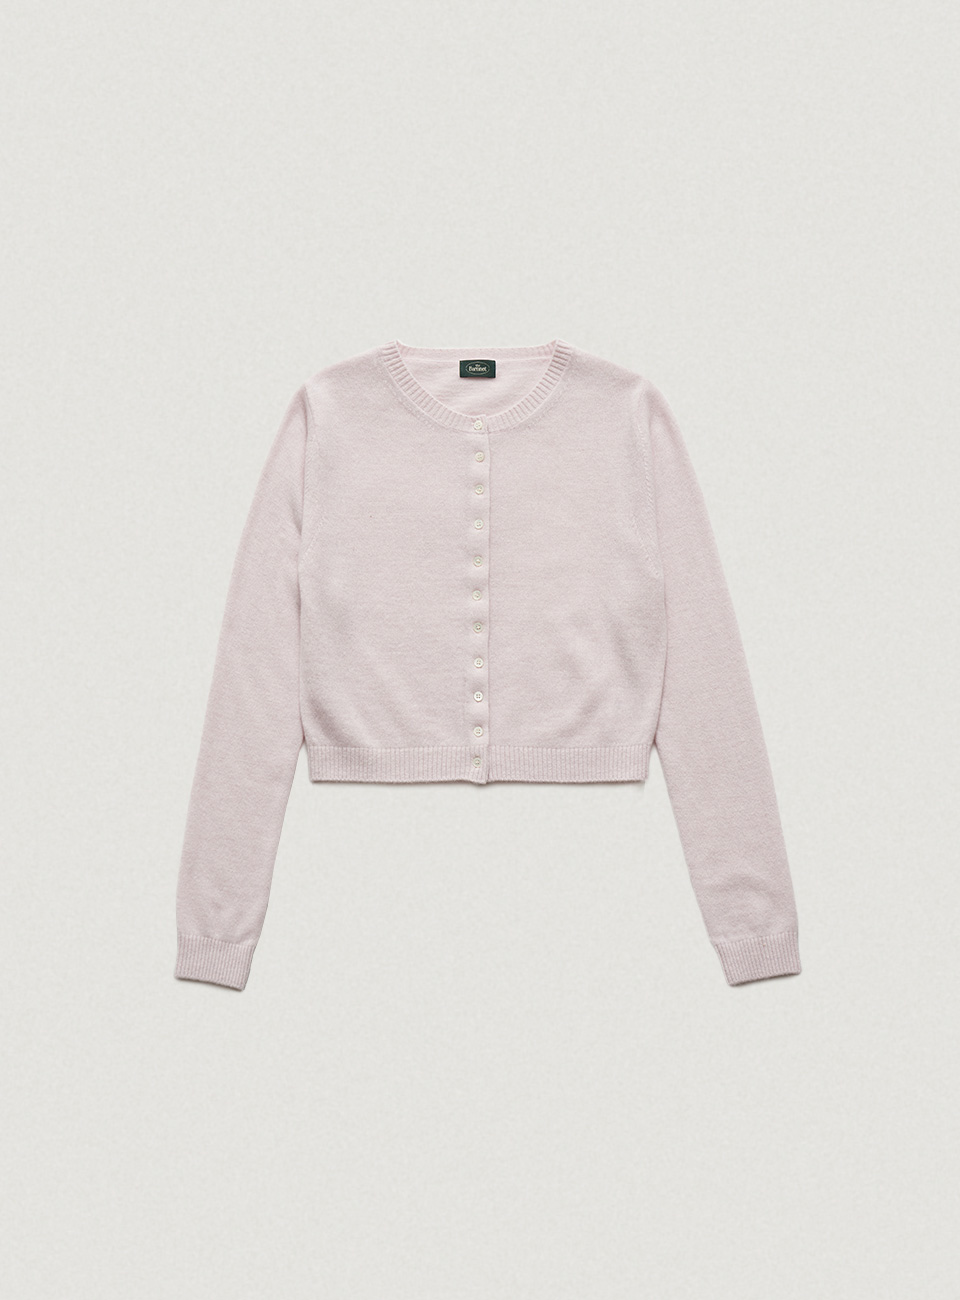 Pale Pink Classic Cropped Knit Cardigan[4월 초 순차 배송]